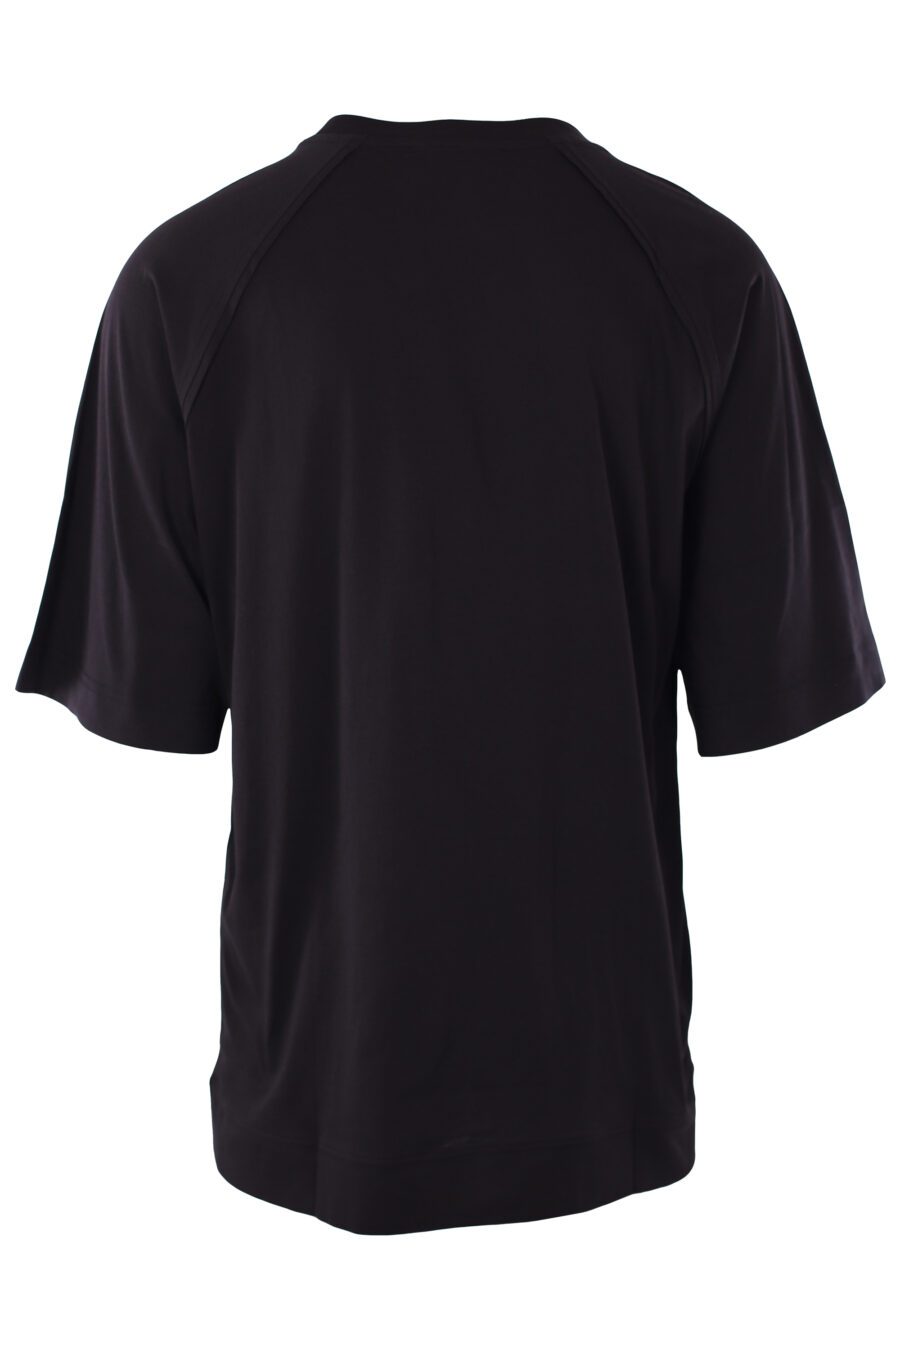 Camiseta negra con logo azul desgastado - IMG 6574